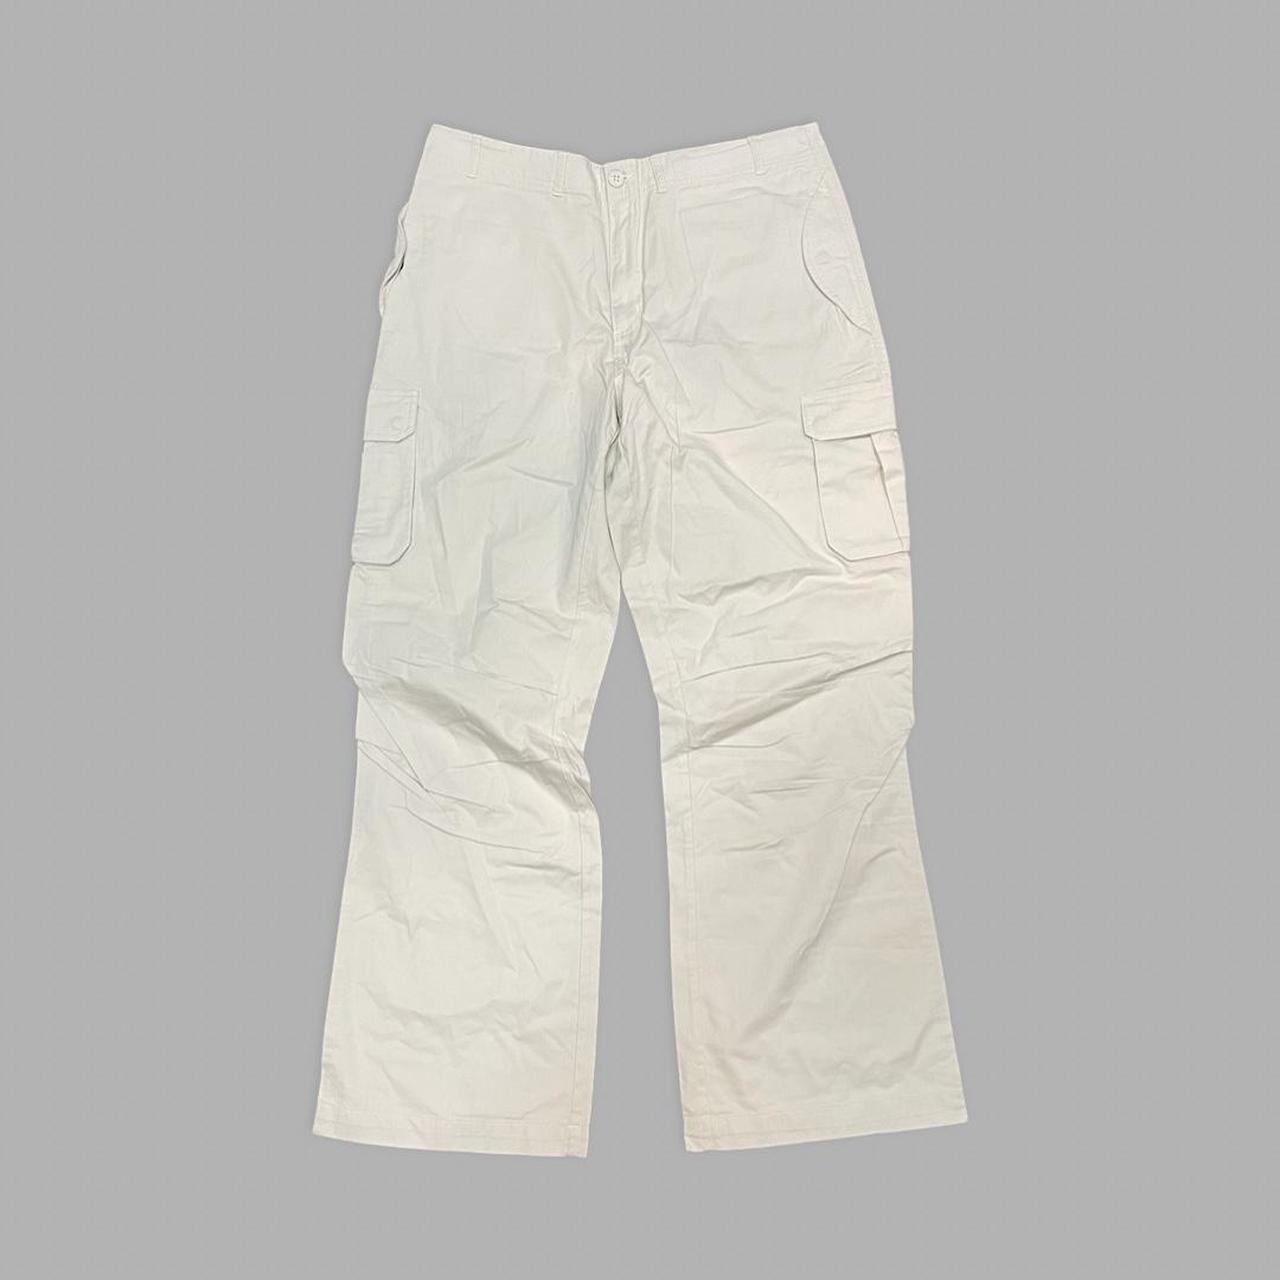 Vintage voi beige cargo trousers w38 regular length... - Depop